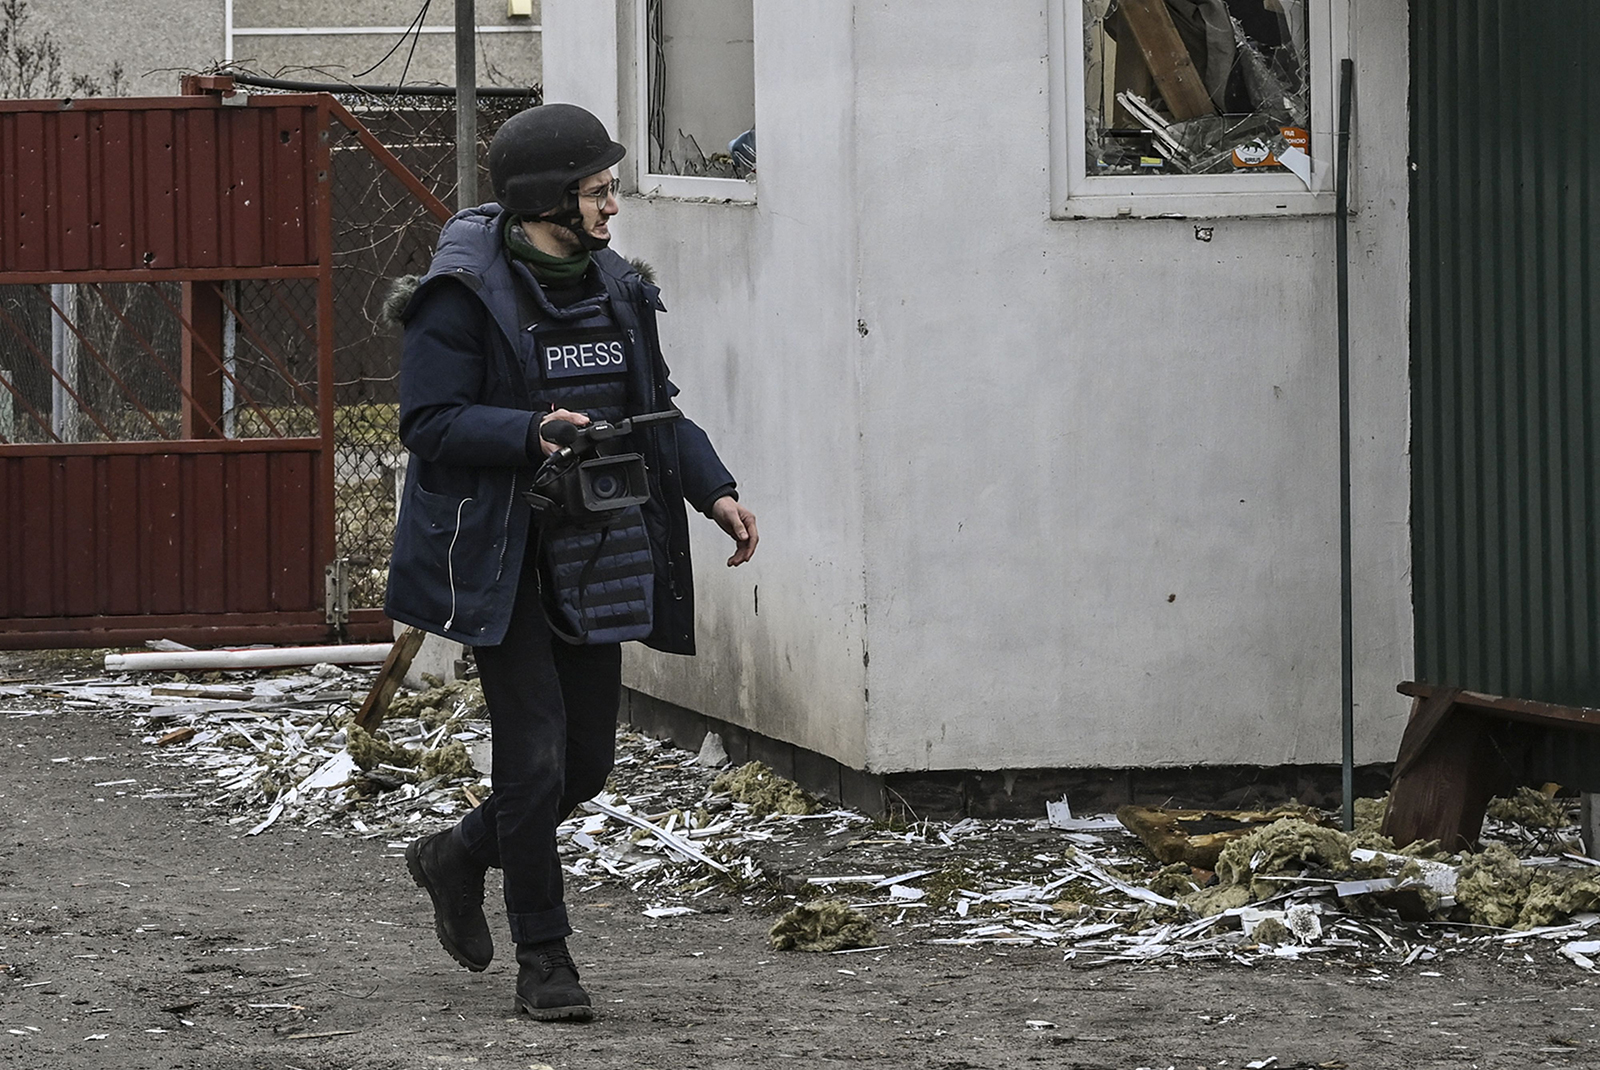 Arman Soldin walks in a village after a shelling in Ukraine on March 3, 2022.